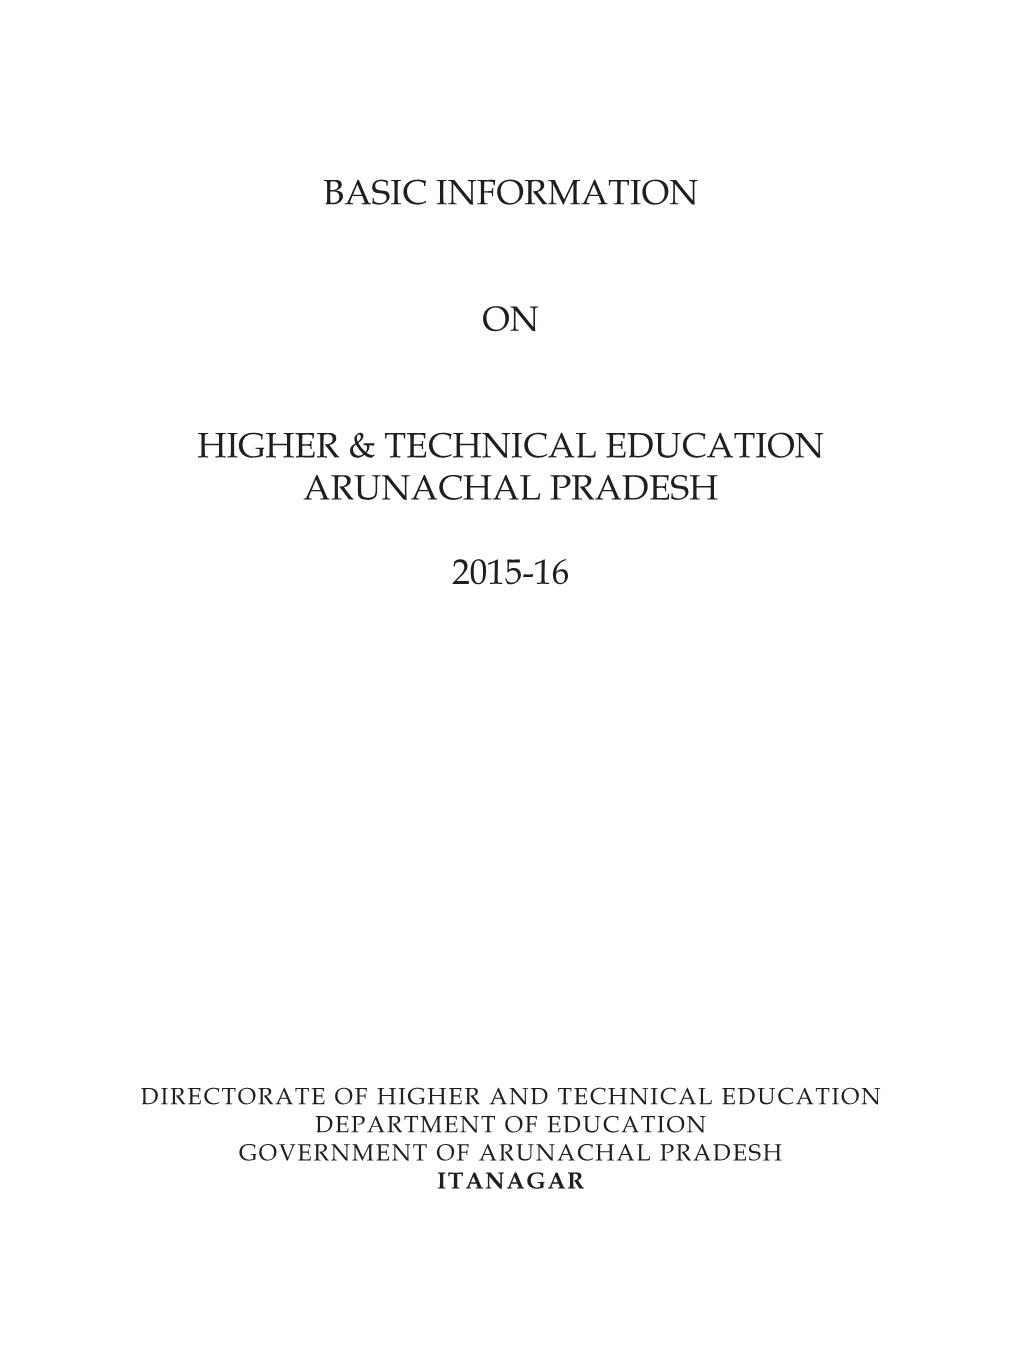 Basic Information on Higher & Technical Education Arunachal